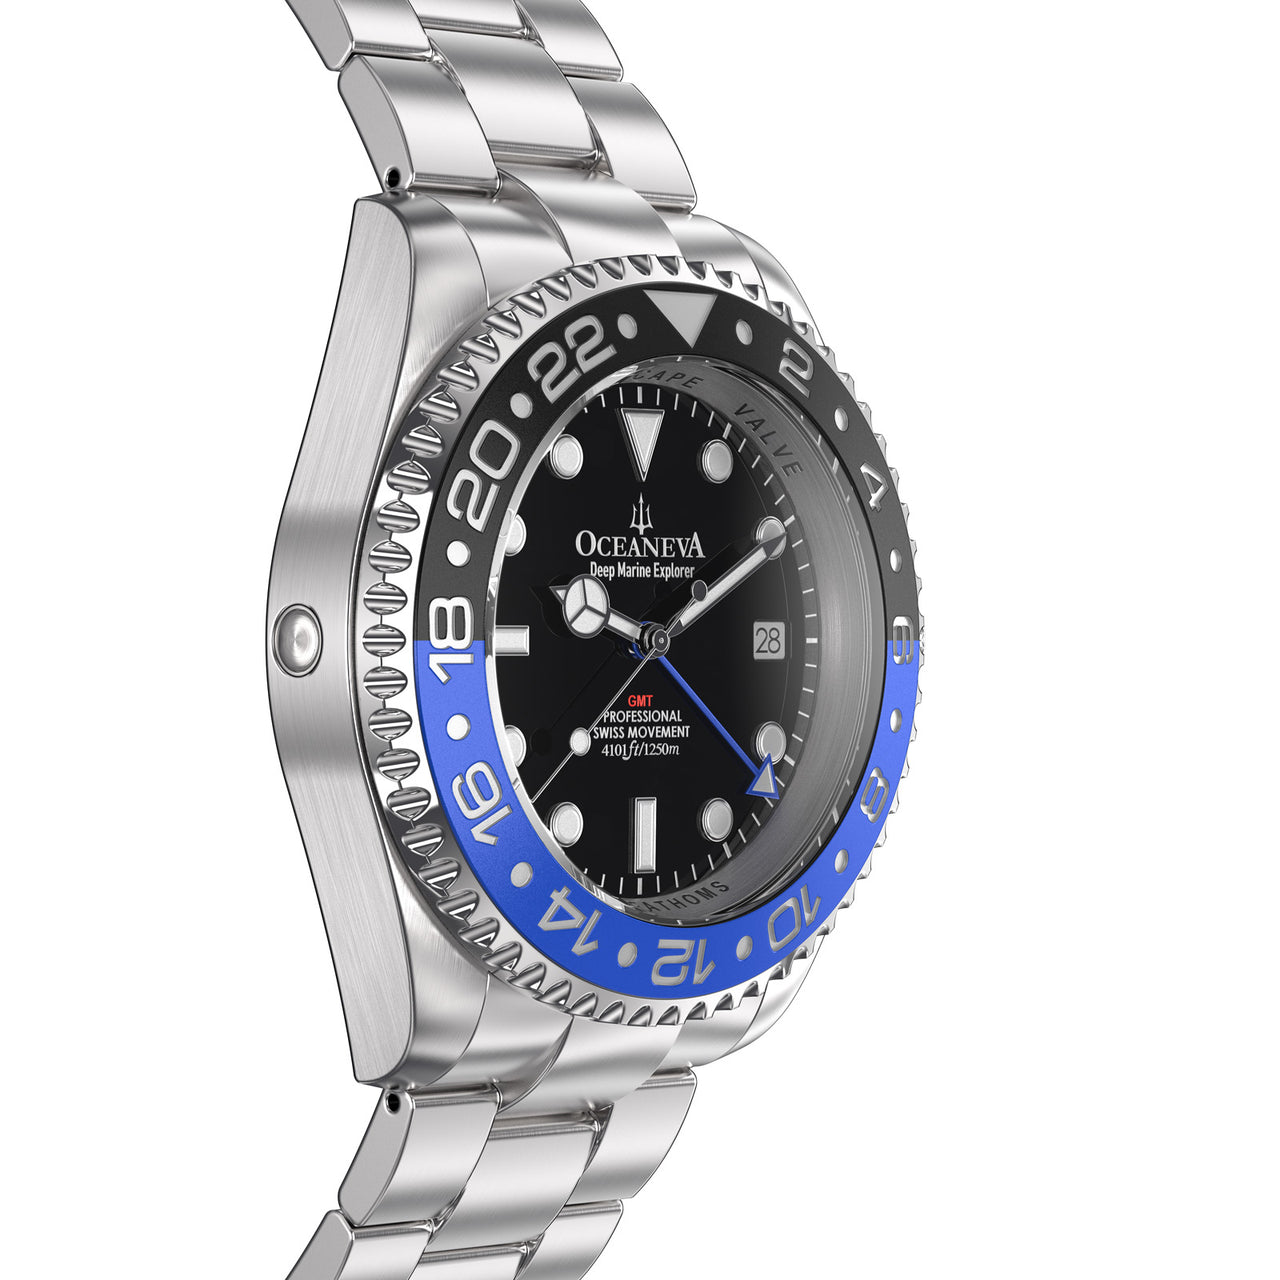 Oceaneva 1250M GMT Dive Watch Blue And Black Side Helium Escape Valve View